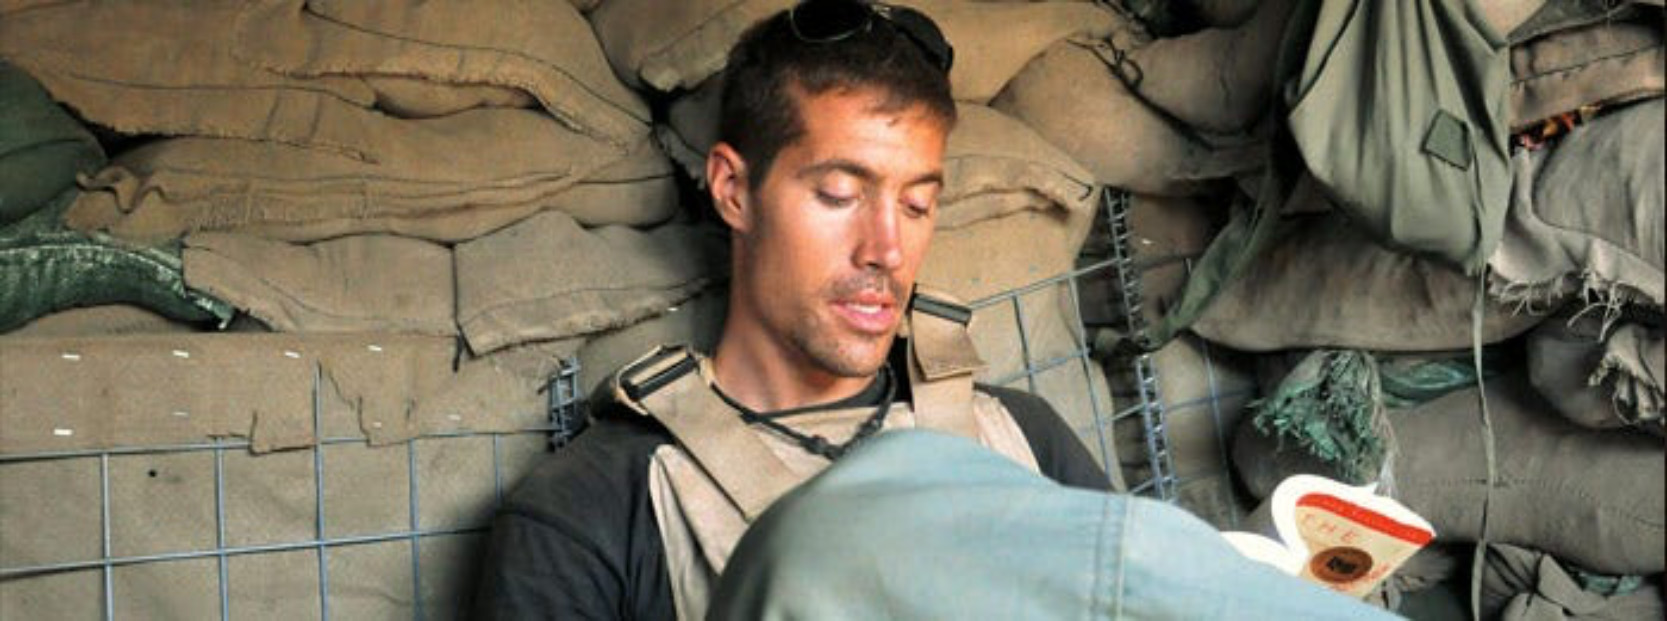 James-Foley-happier-times